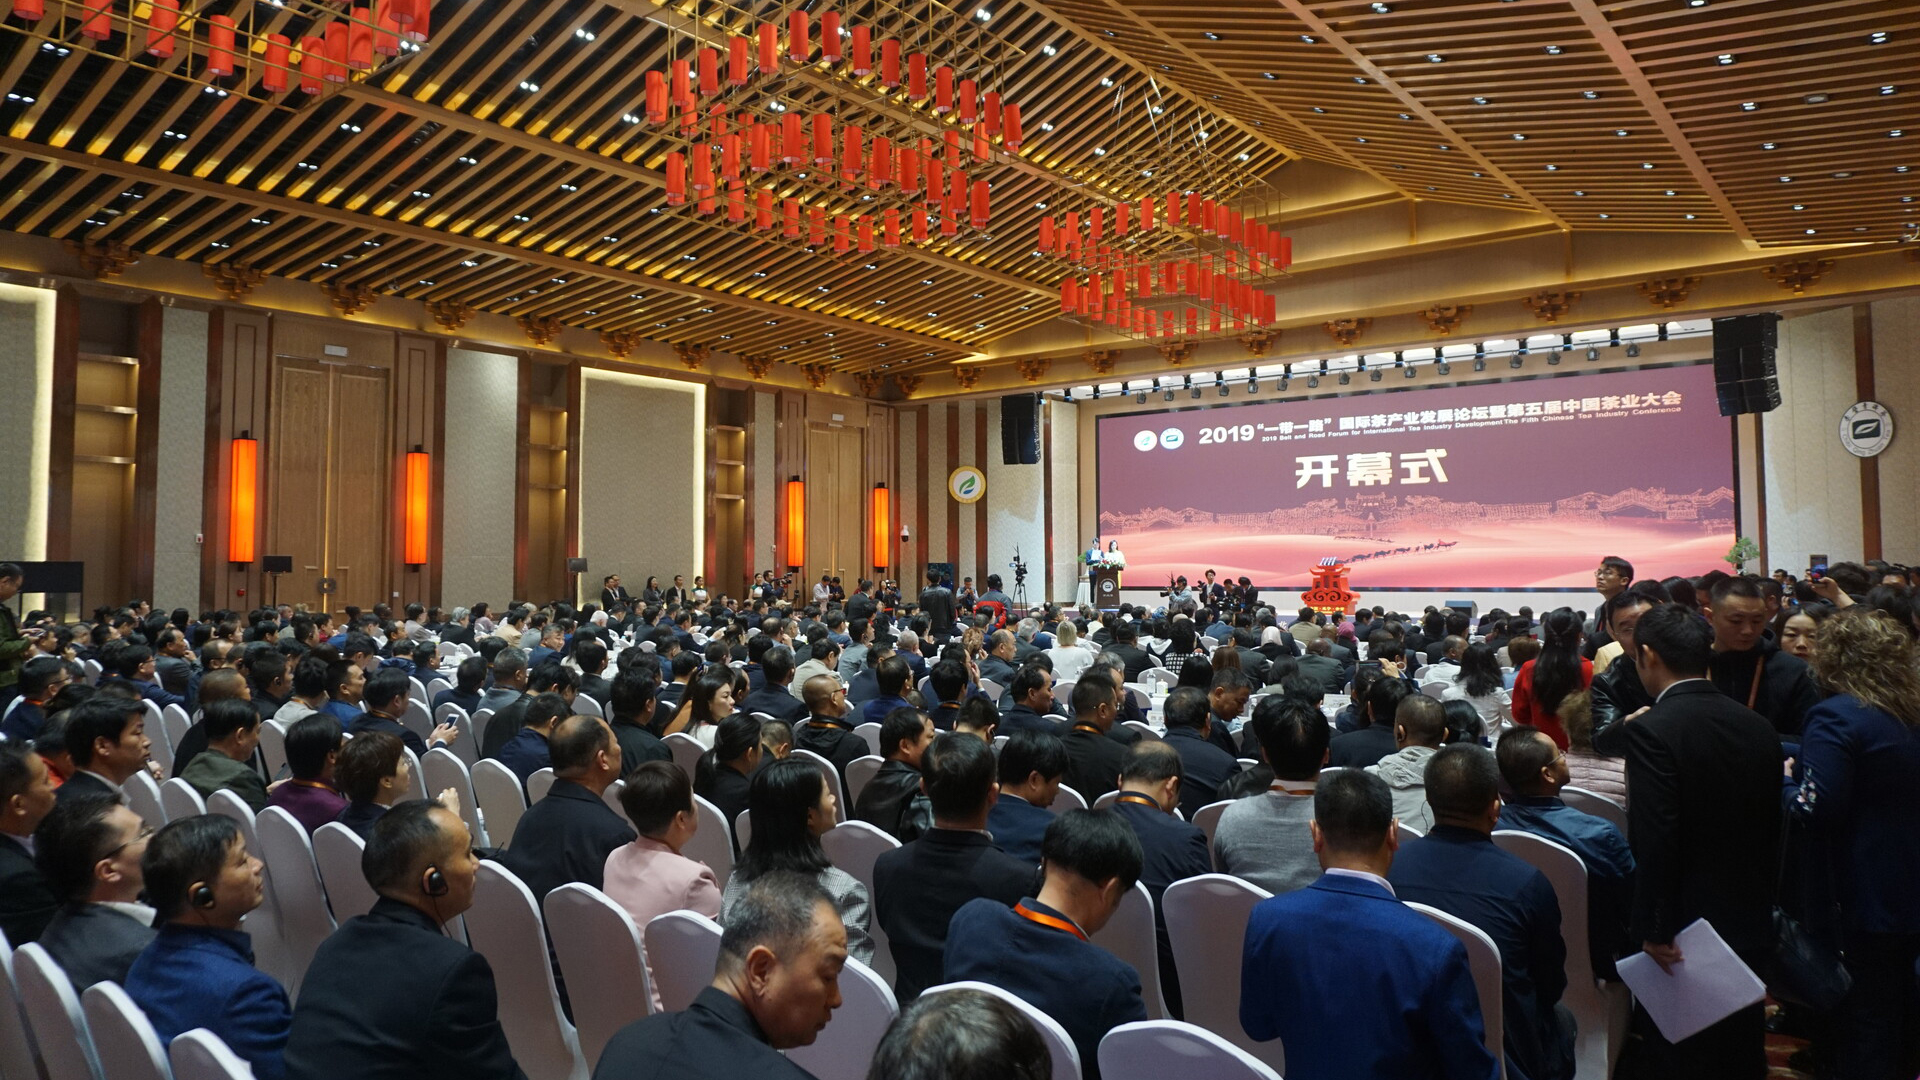 2019 "Belt and Road" Forum for International Tea Industry Development 